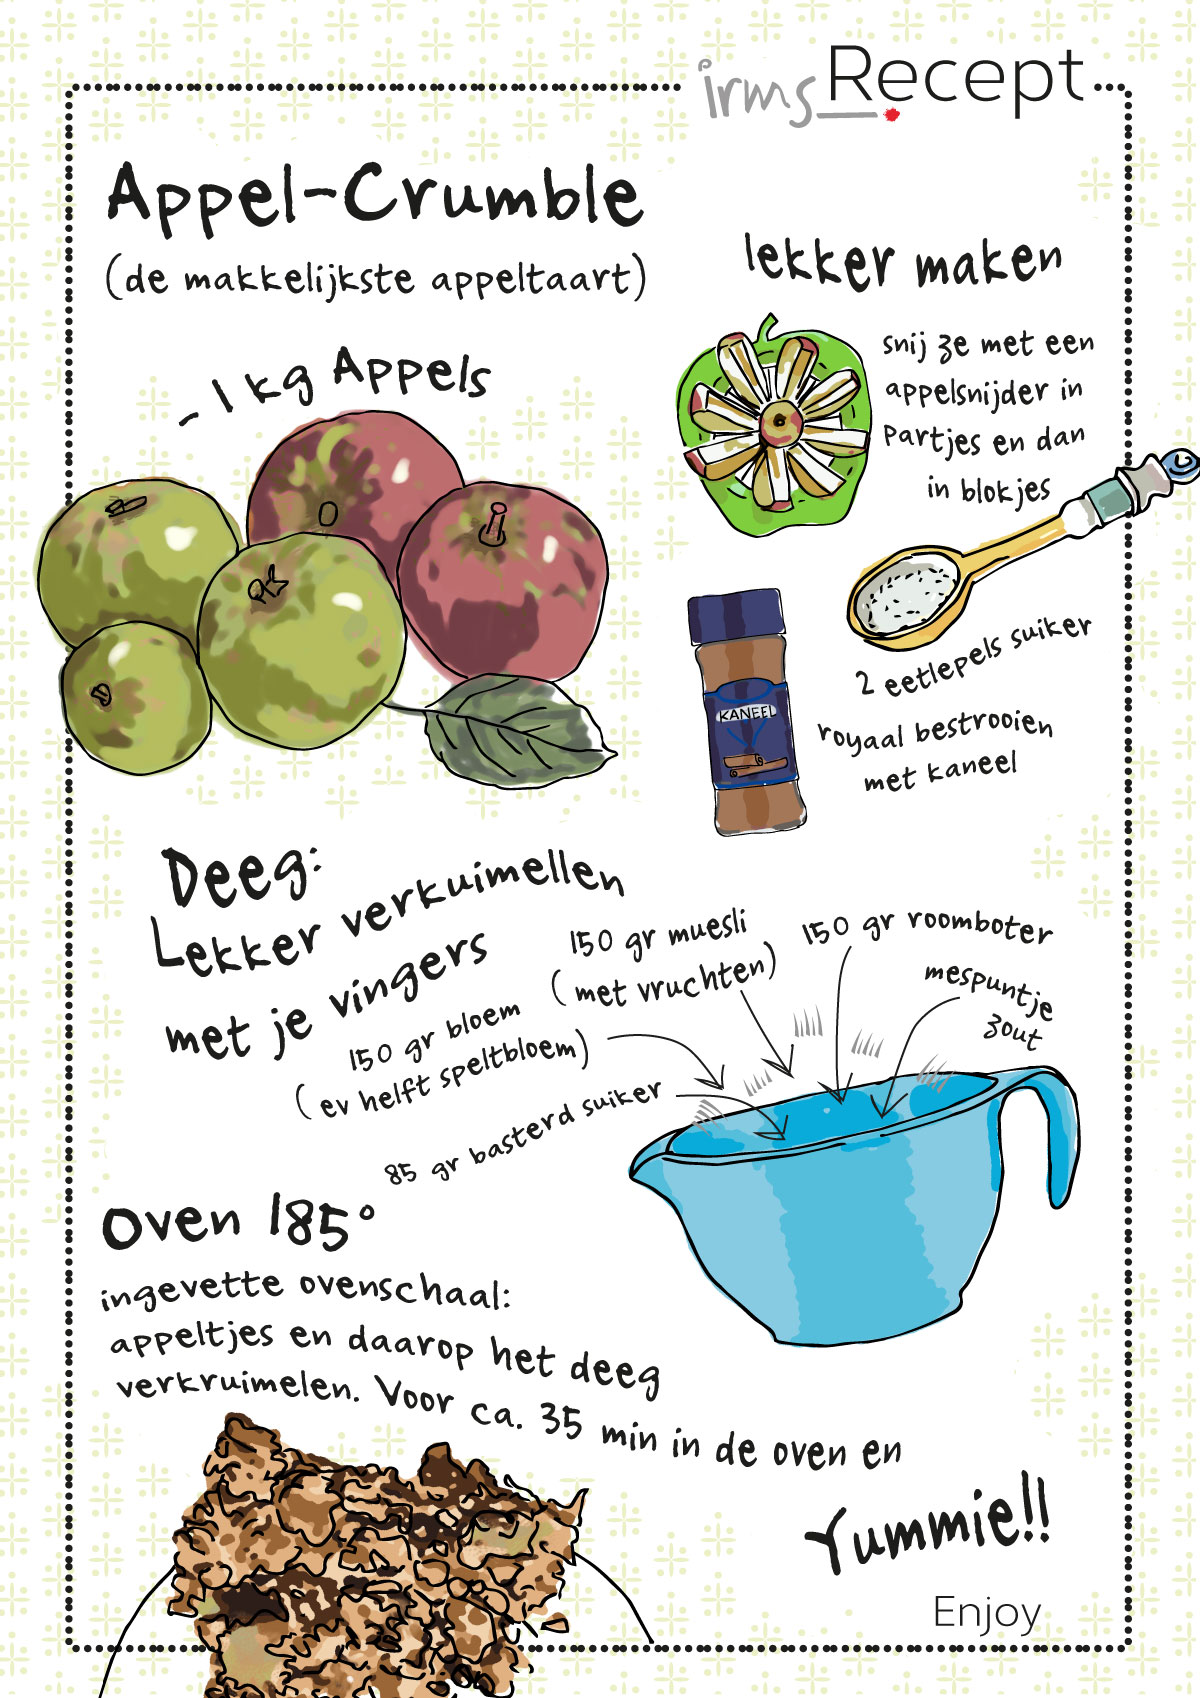 apple-crumble-recept-irmsblog